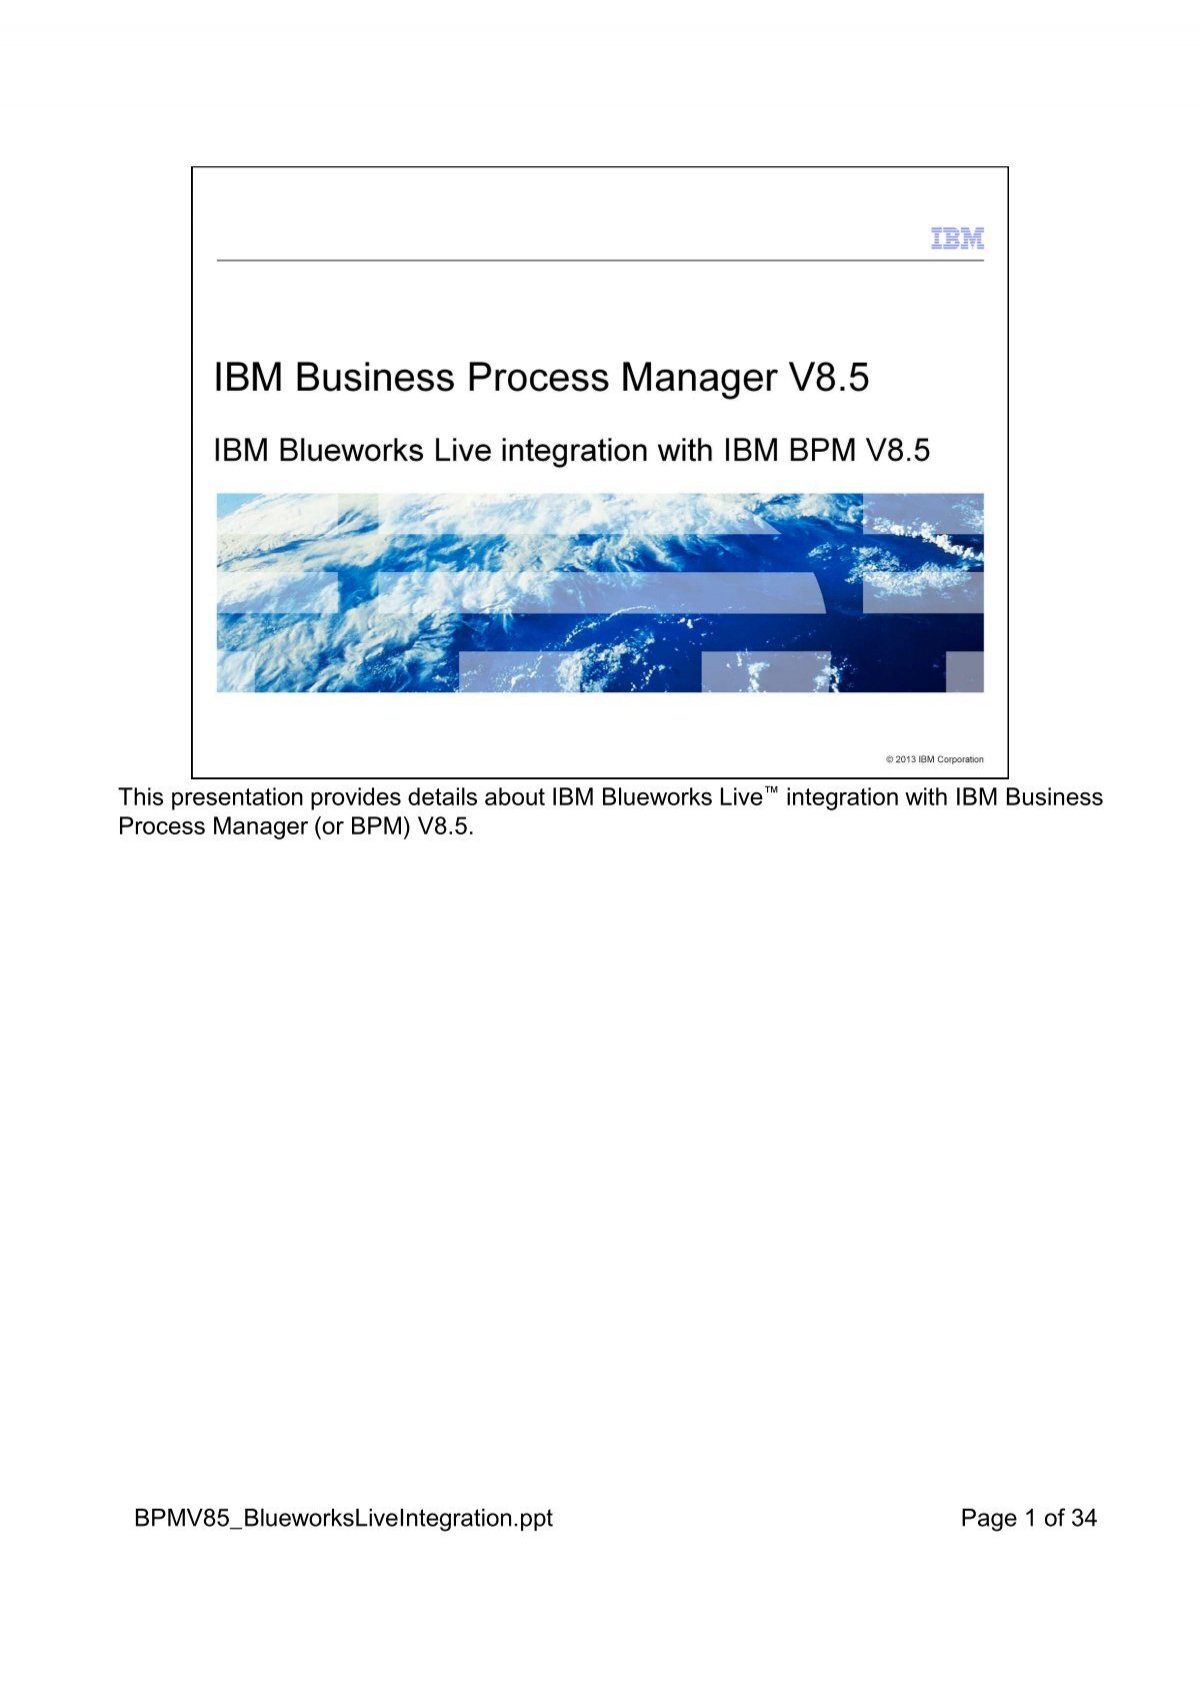 This presentation provides details about IBM Blueworks Live - Support